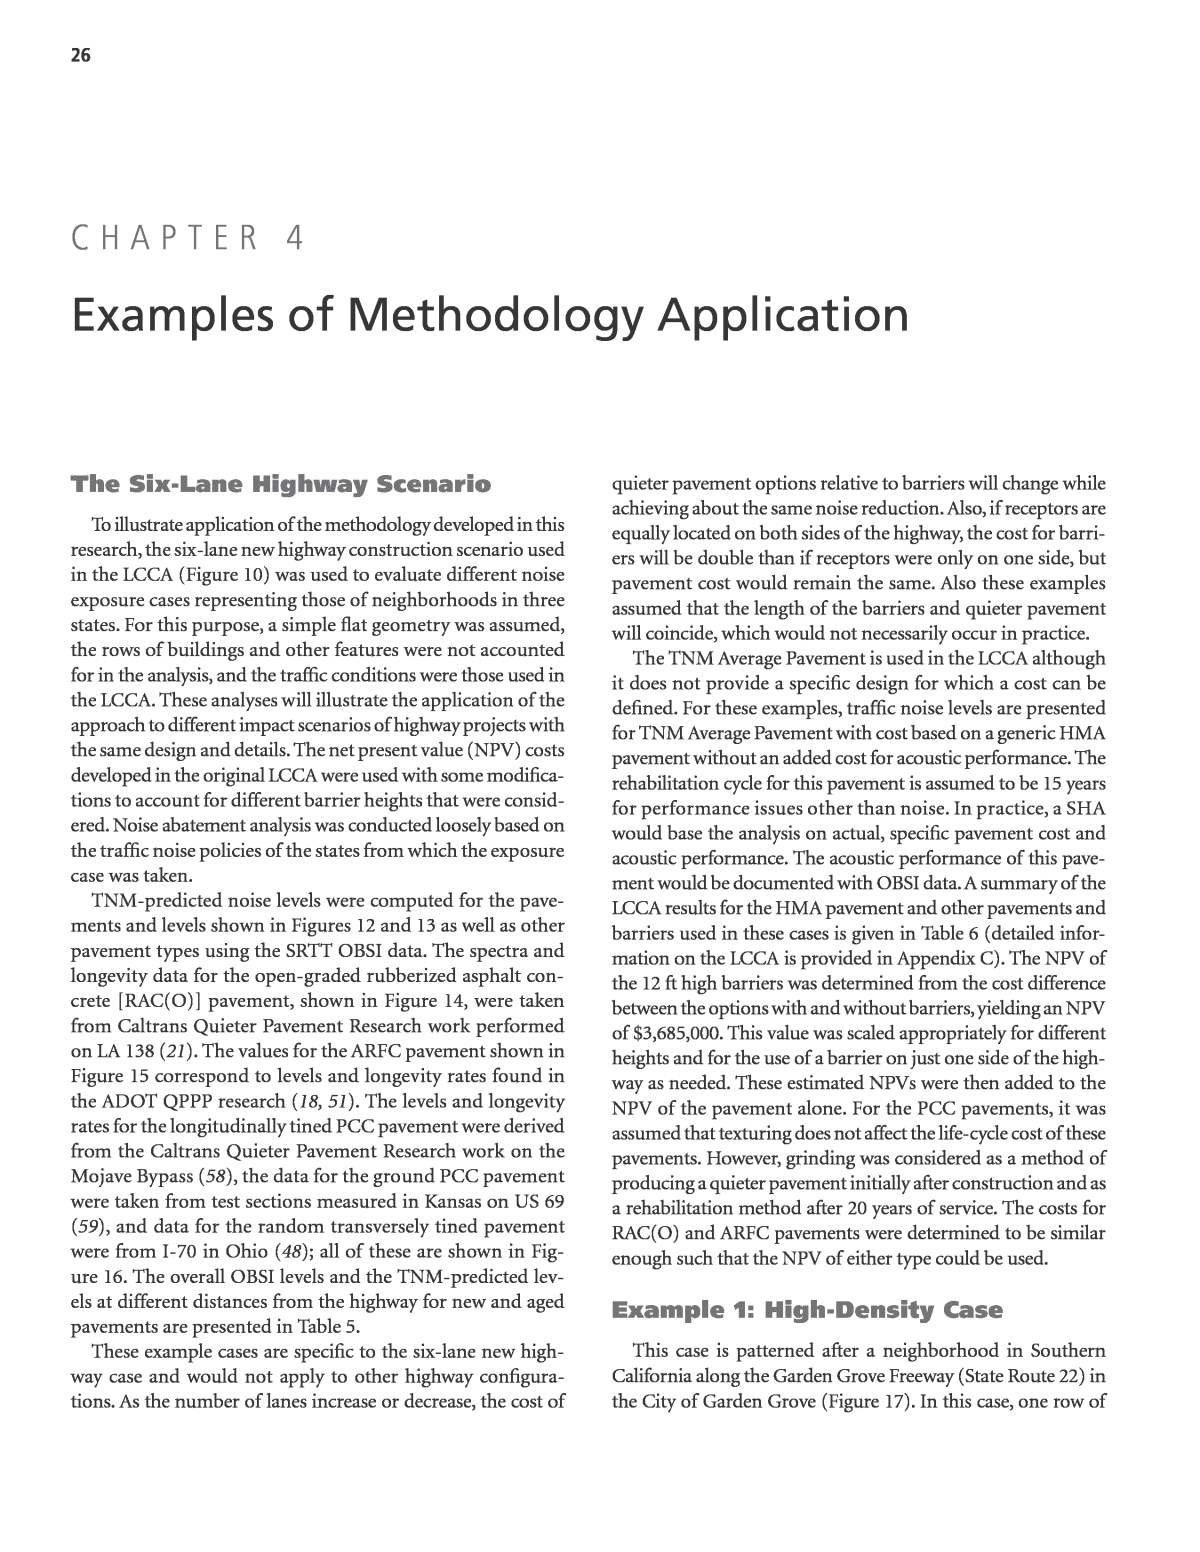 description of methodology example